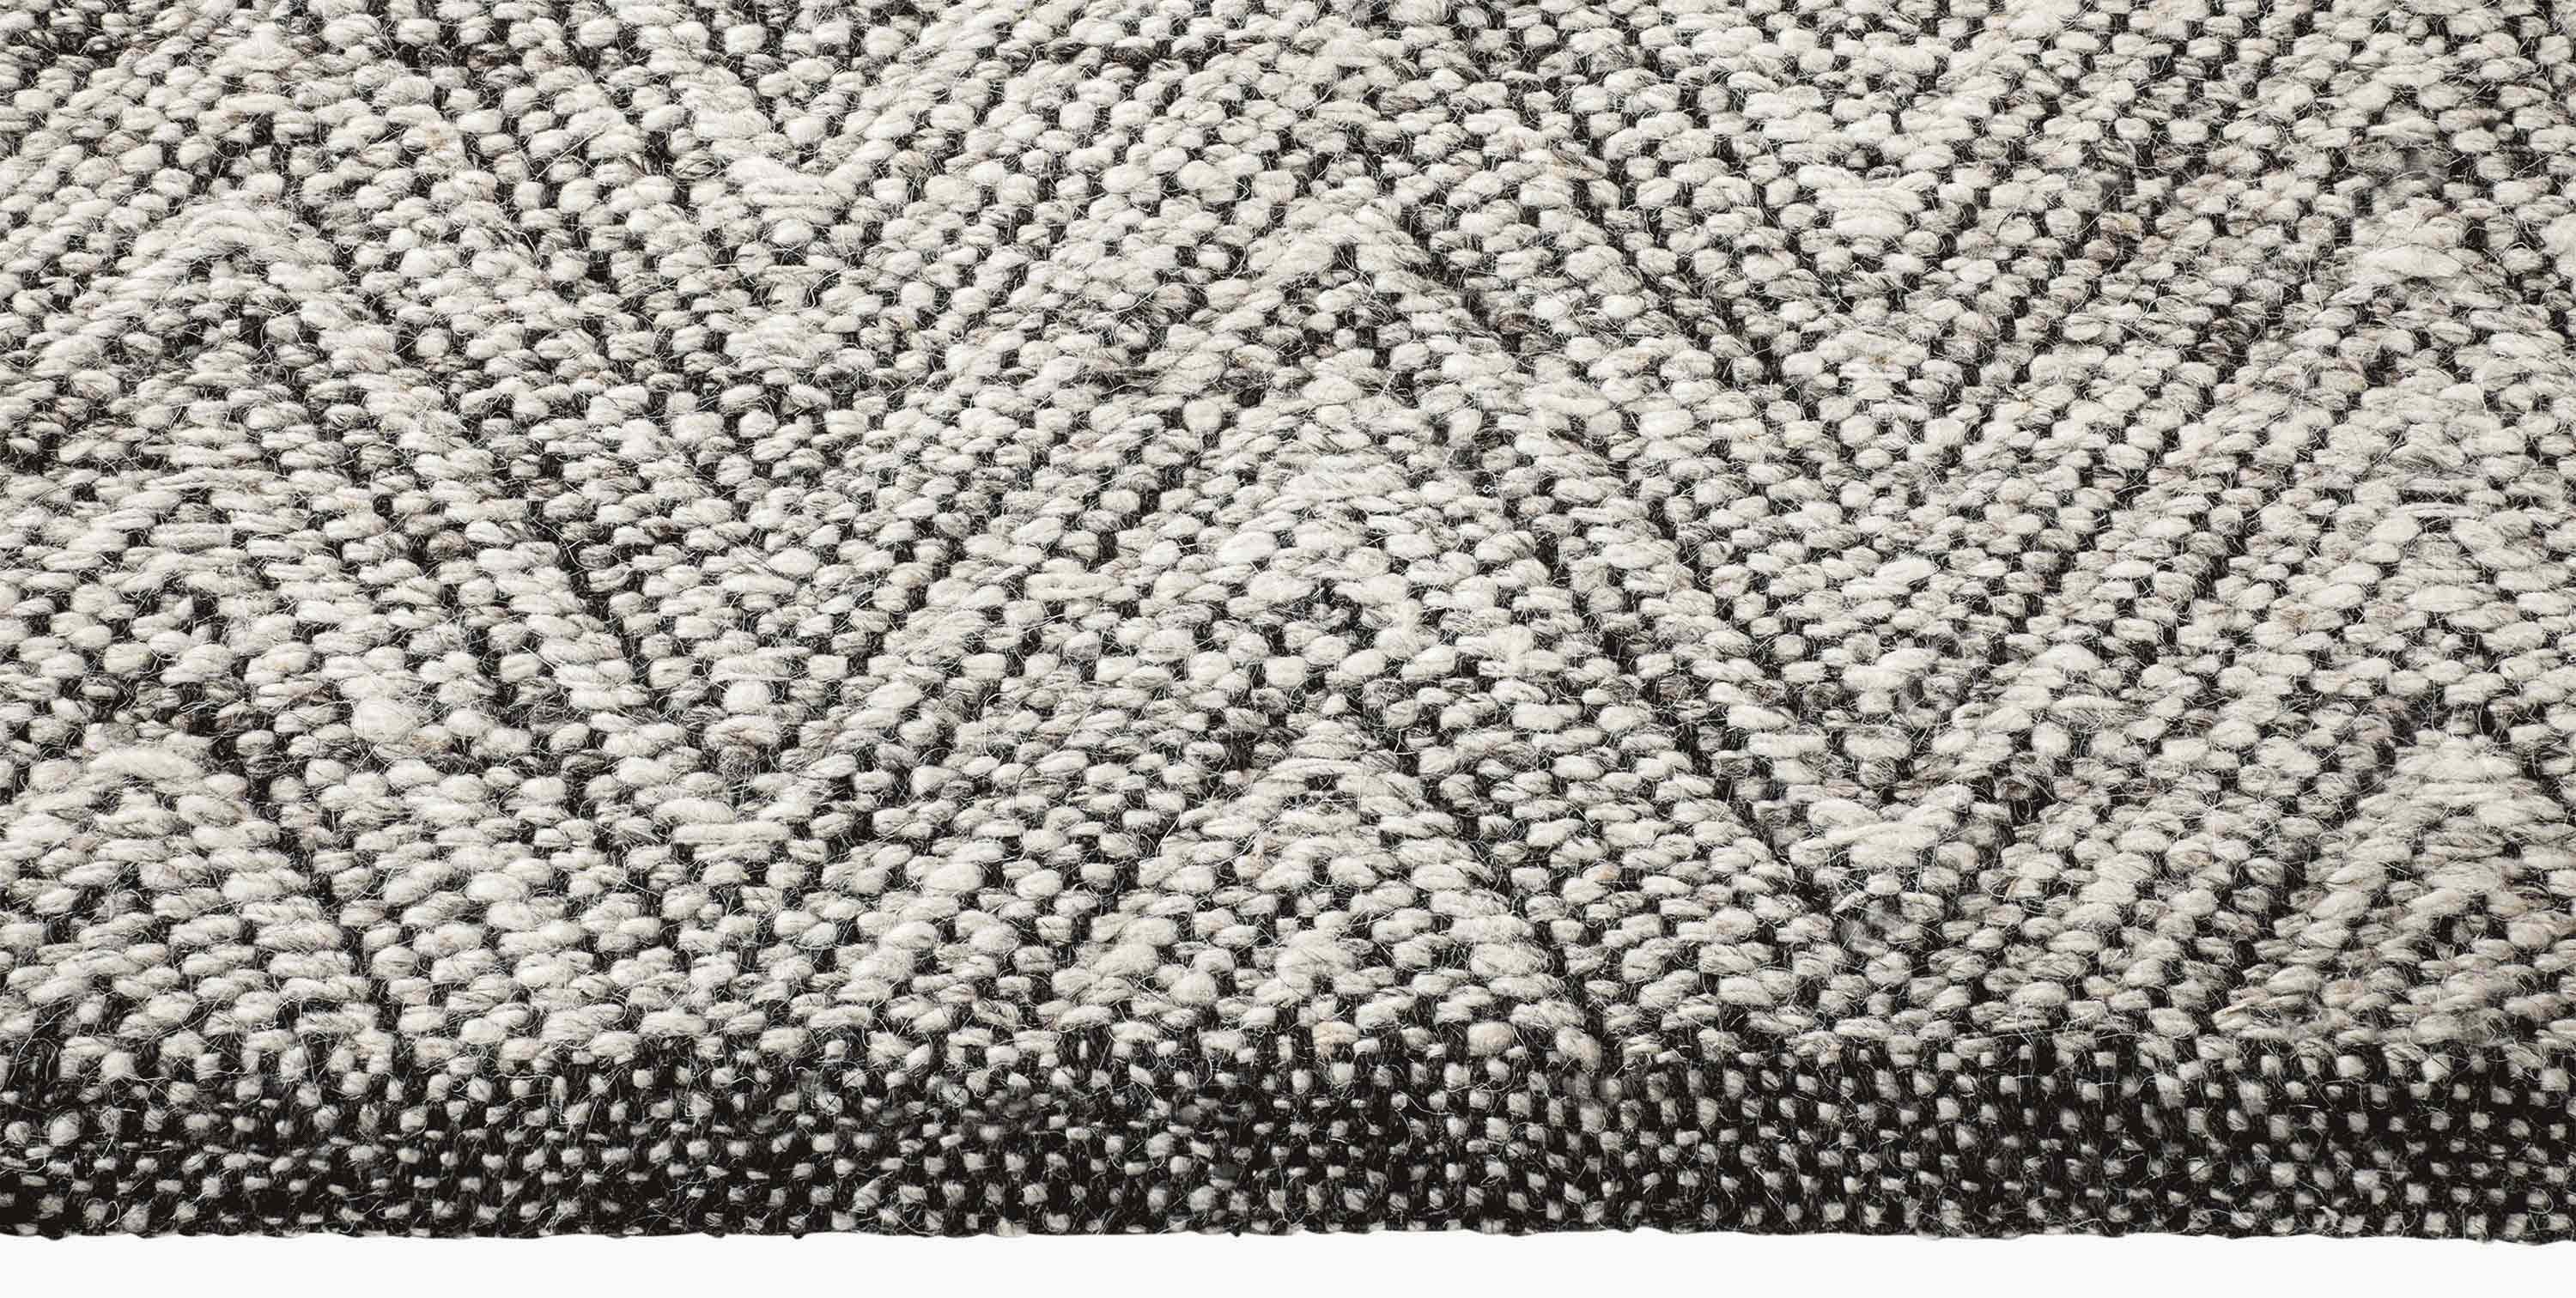 For Sale: Silver Ben Soleimani Ceyah Rug– Hand-woven Plush Textured Wool + Linen Charcoal 6'x9' 3